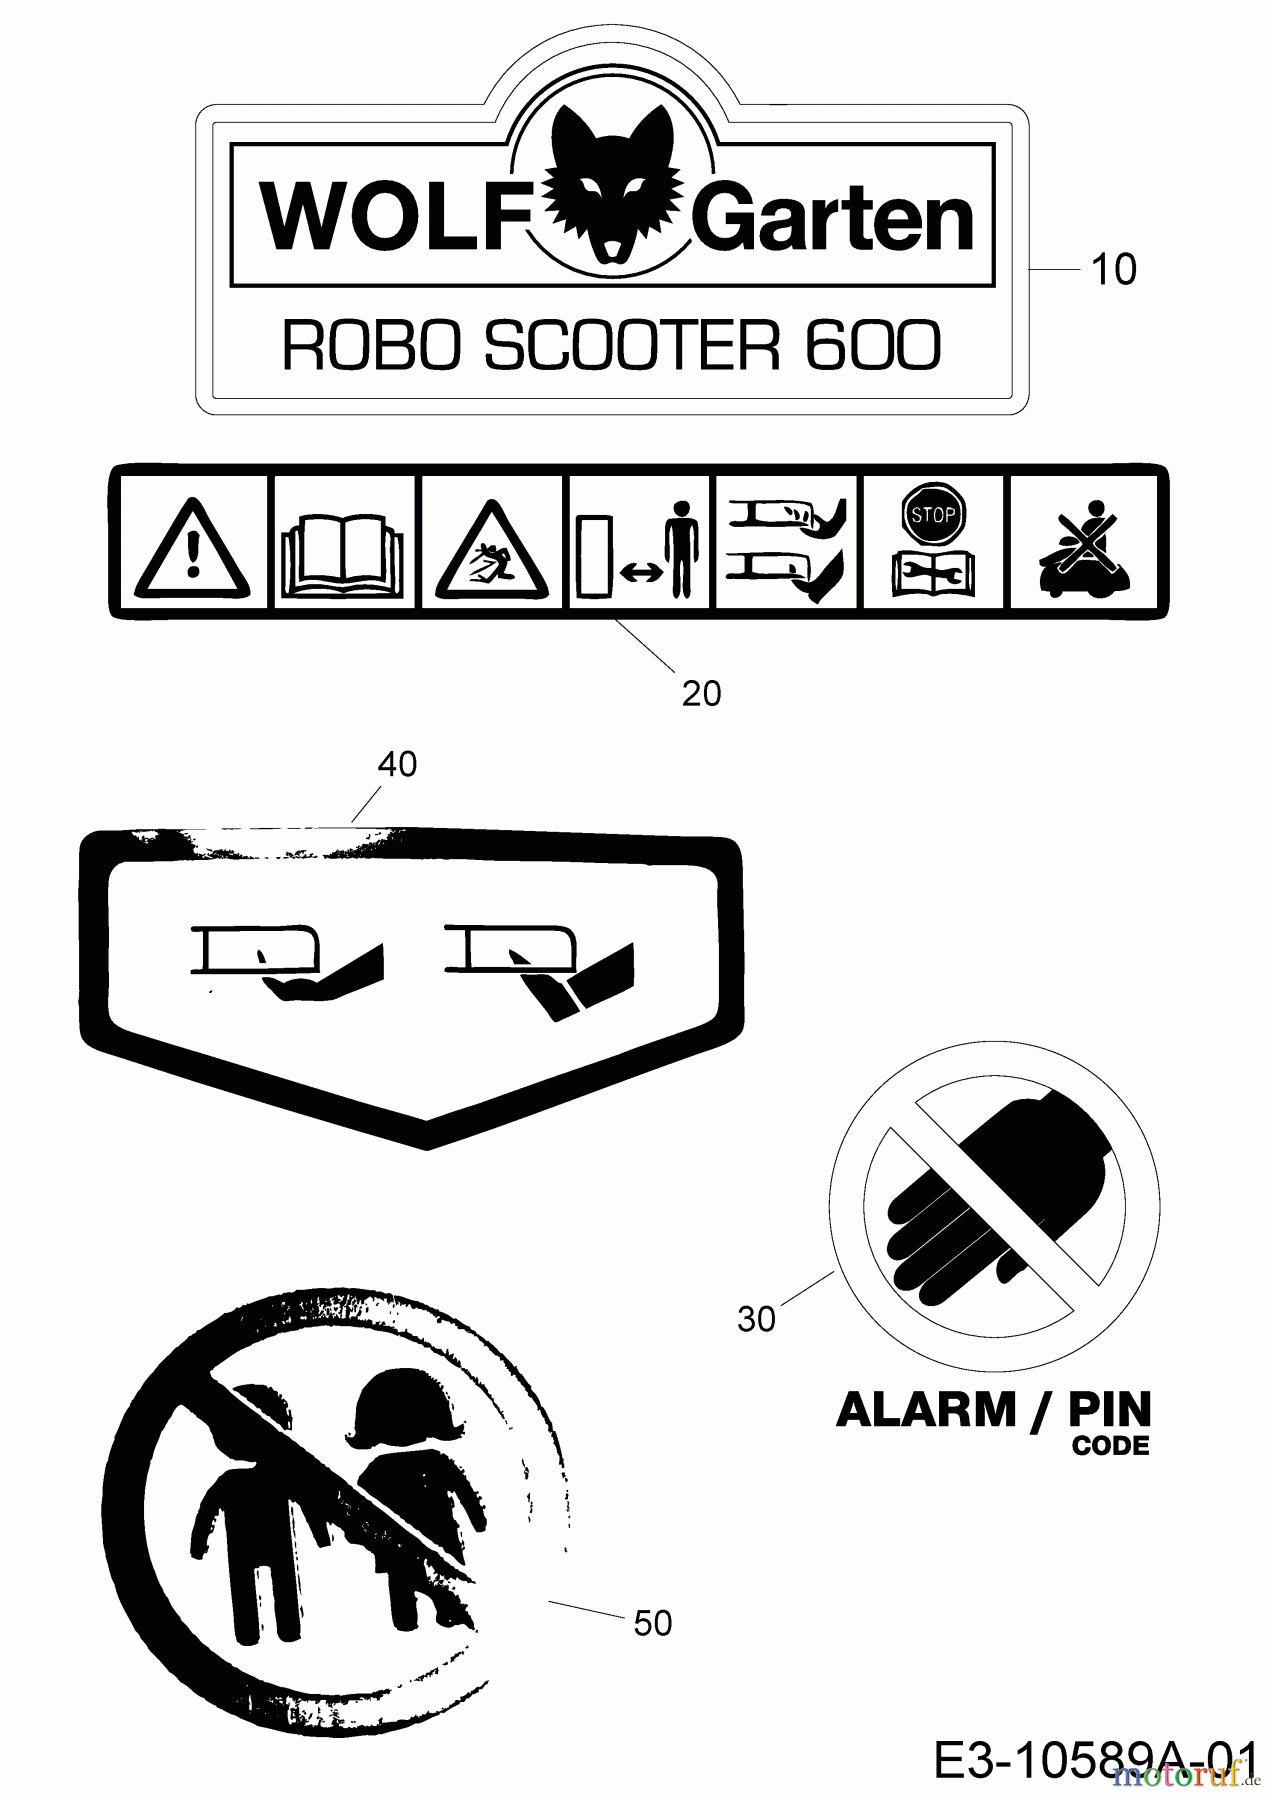  Wolf-Garten Robotic lawn mower Robo Scooter 600 18AO06LF650  (2014) Labels